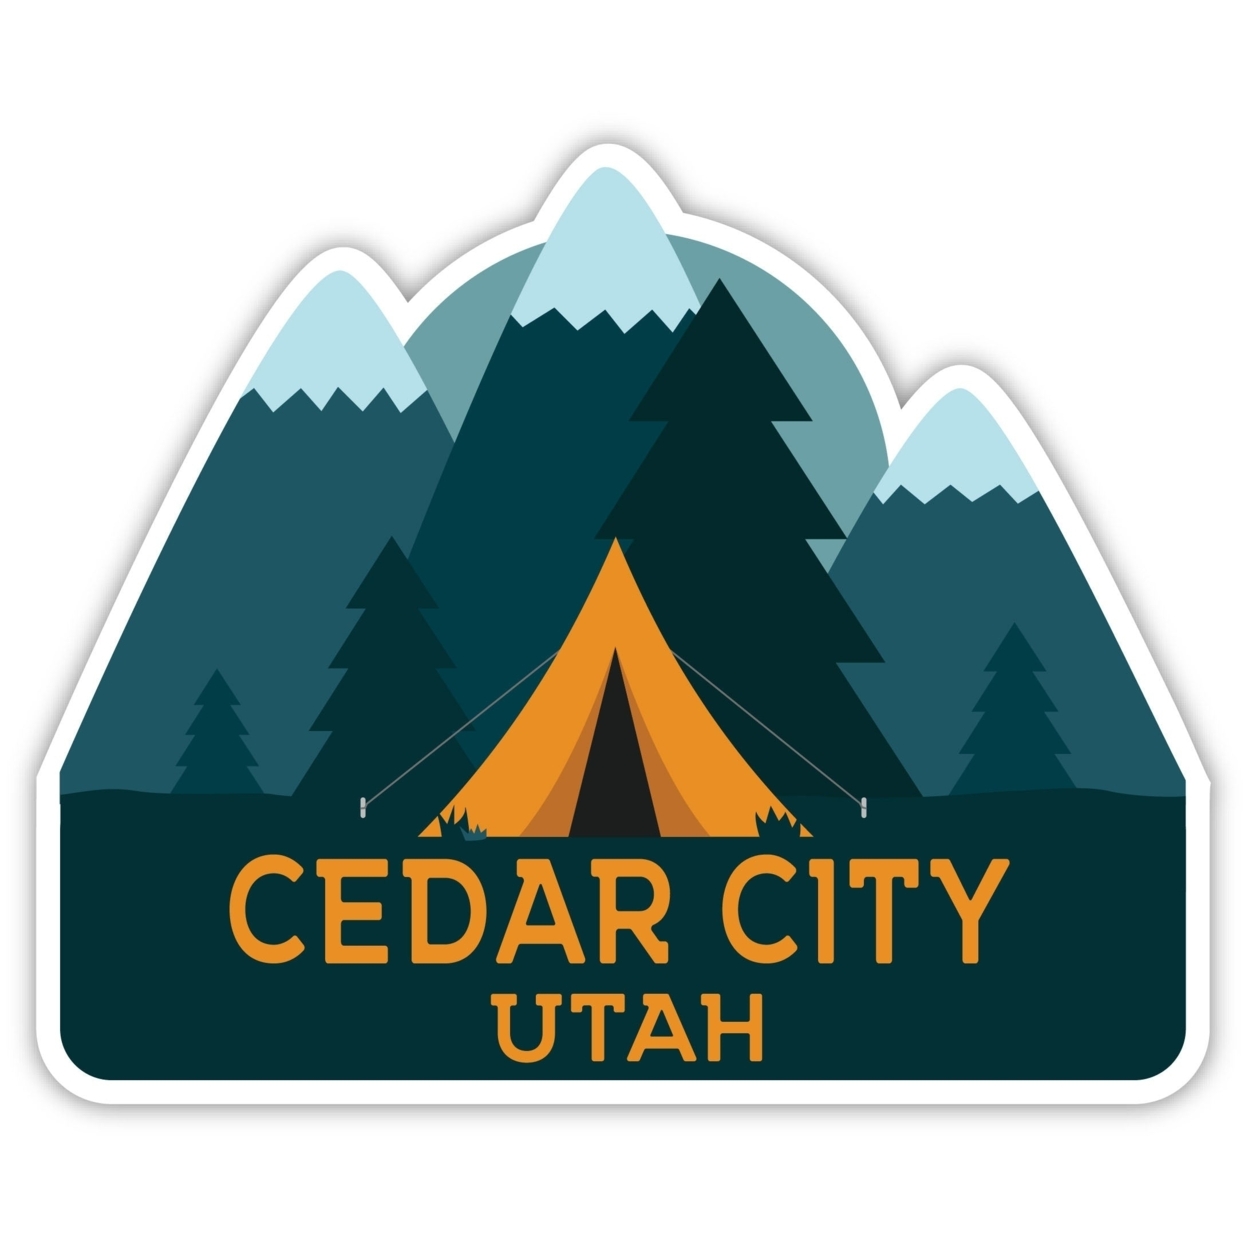 Cedar City Utah Souvenir Decorative Stickers (Choose Theme And Size) - 4-Pack, 6-Inch, Camp Life